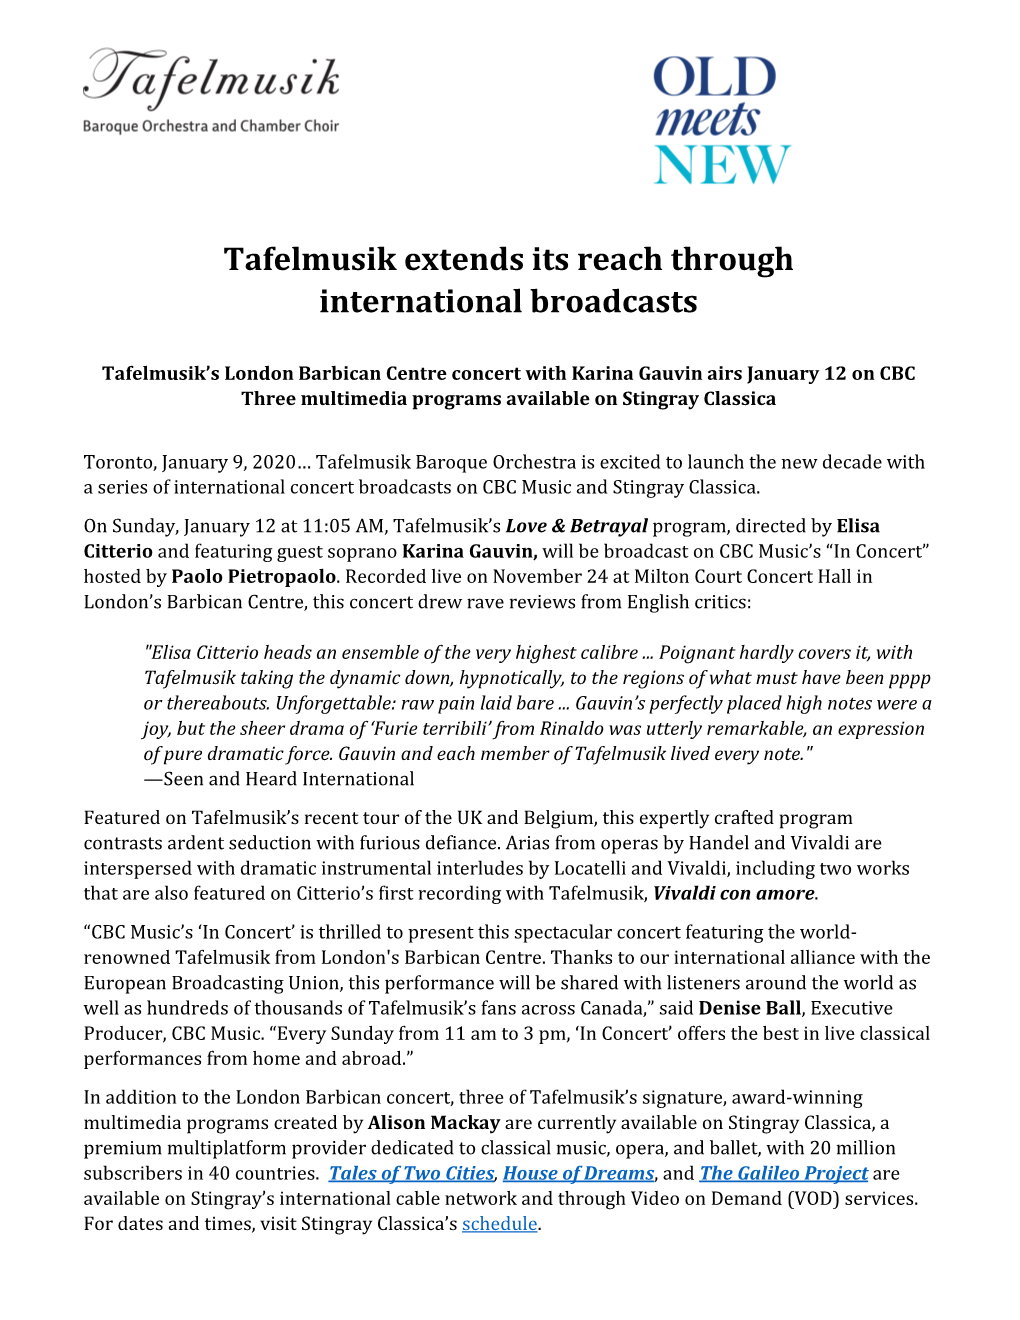 Tafelmusik Extends Its Reach Through International Broadcasts